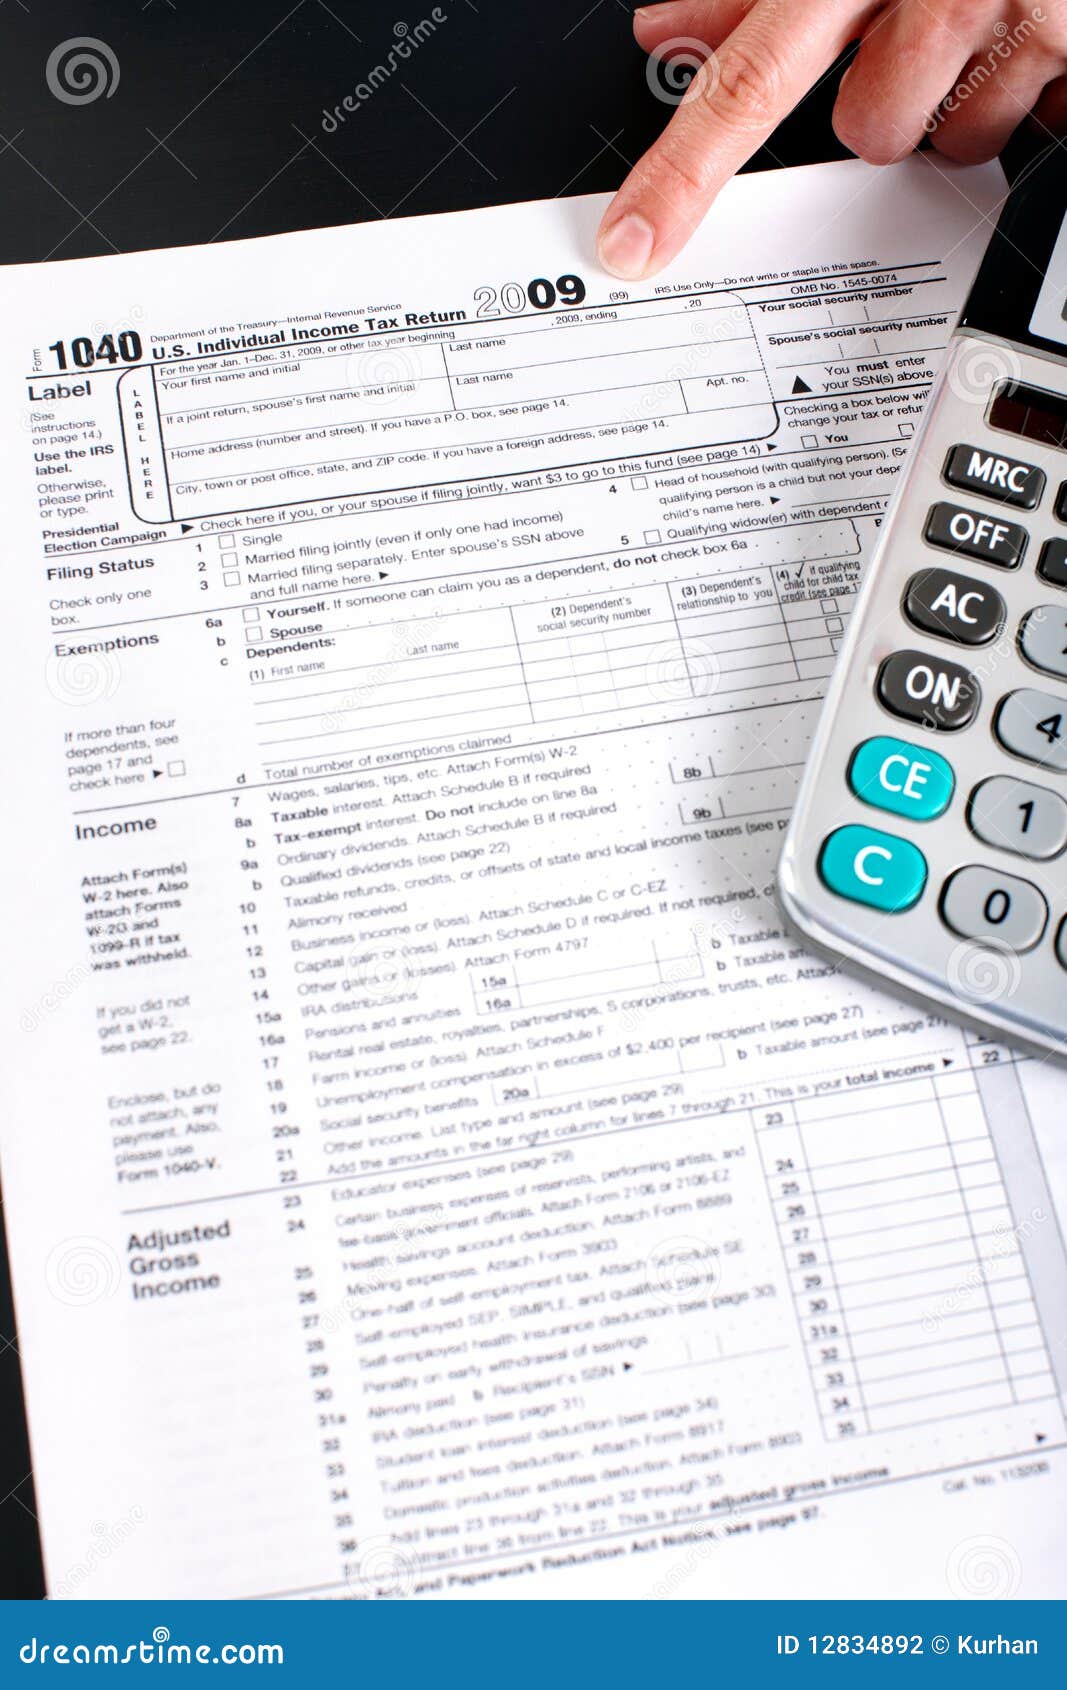 tax-return-income-tax-return-calculator